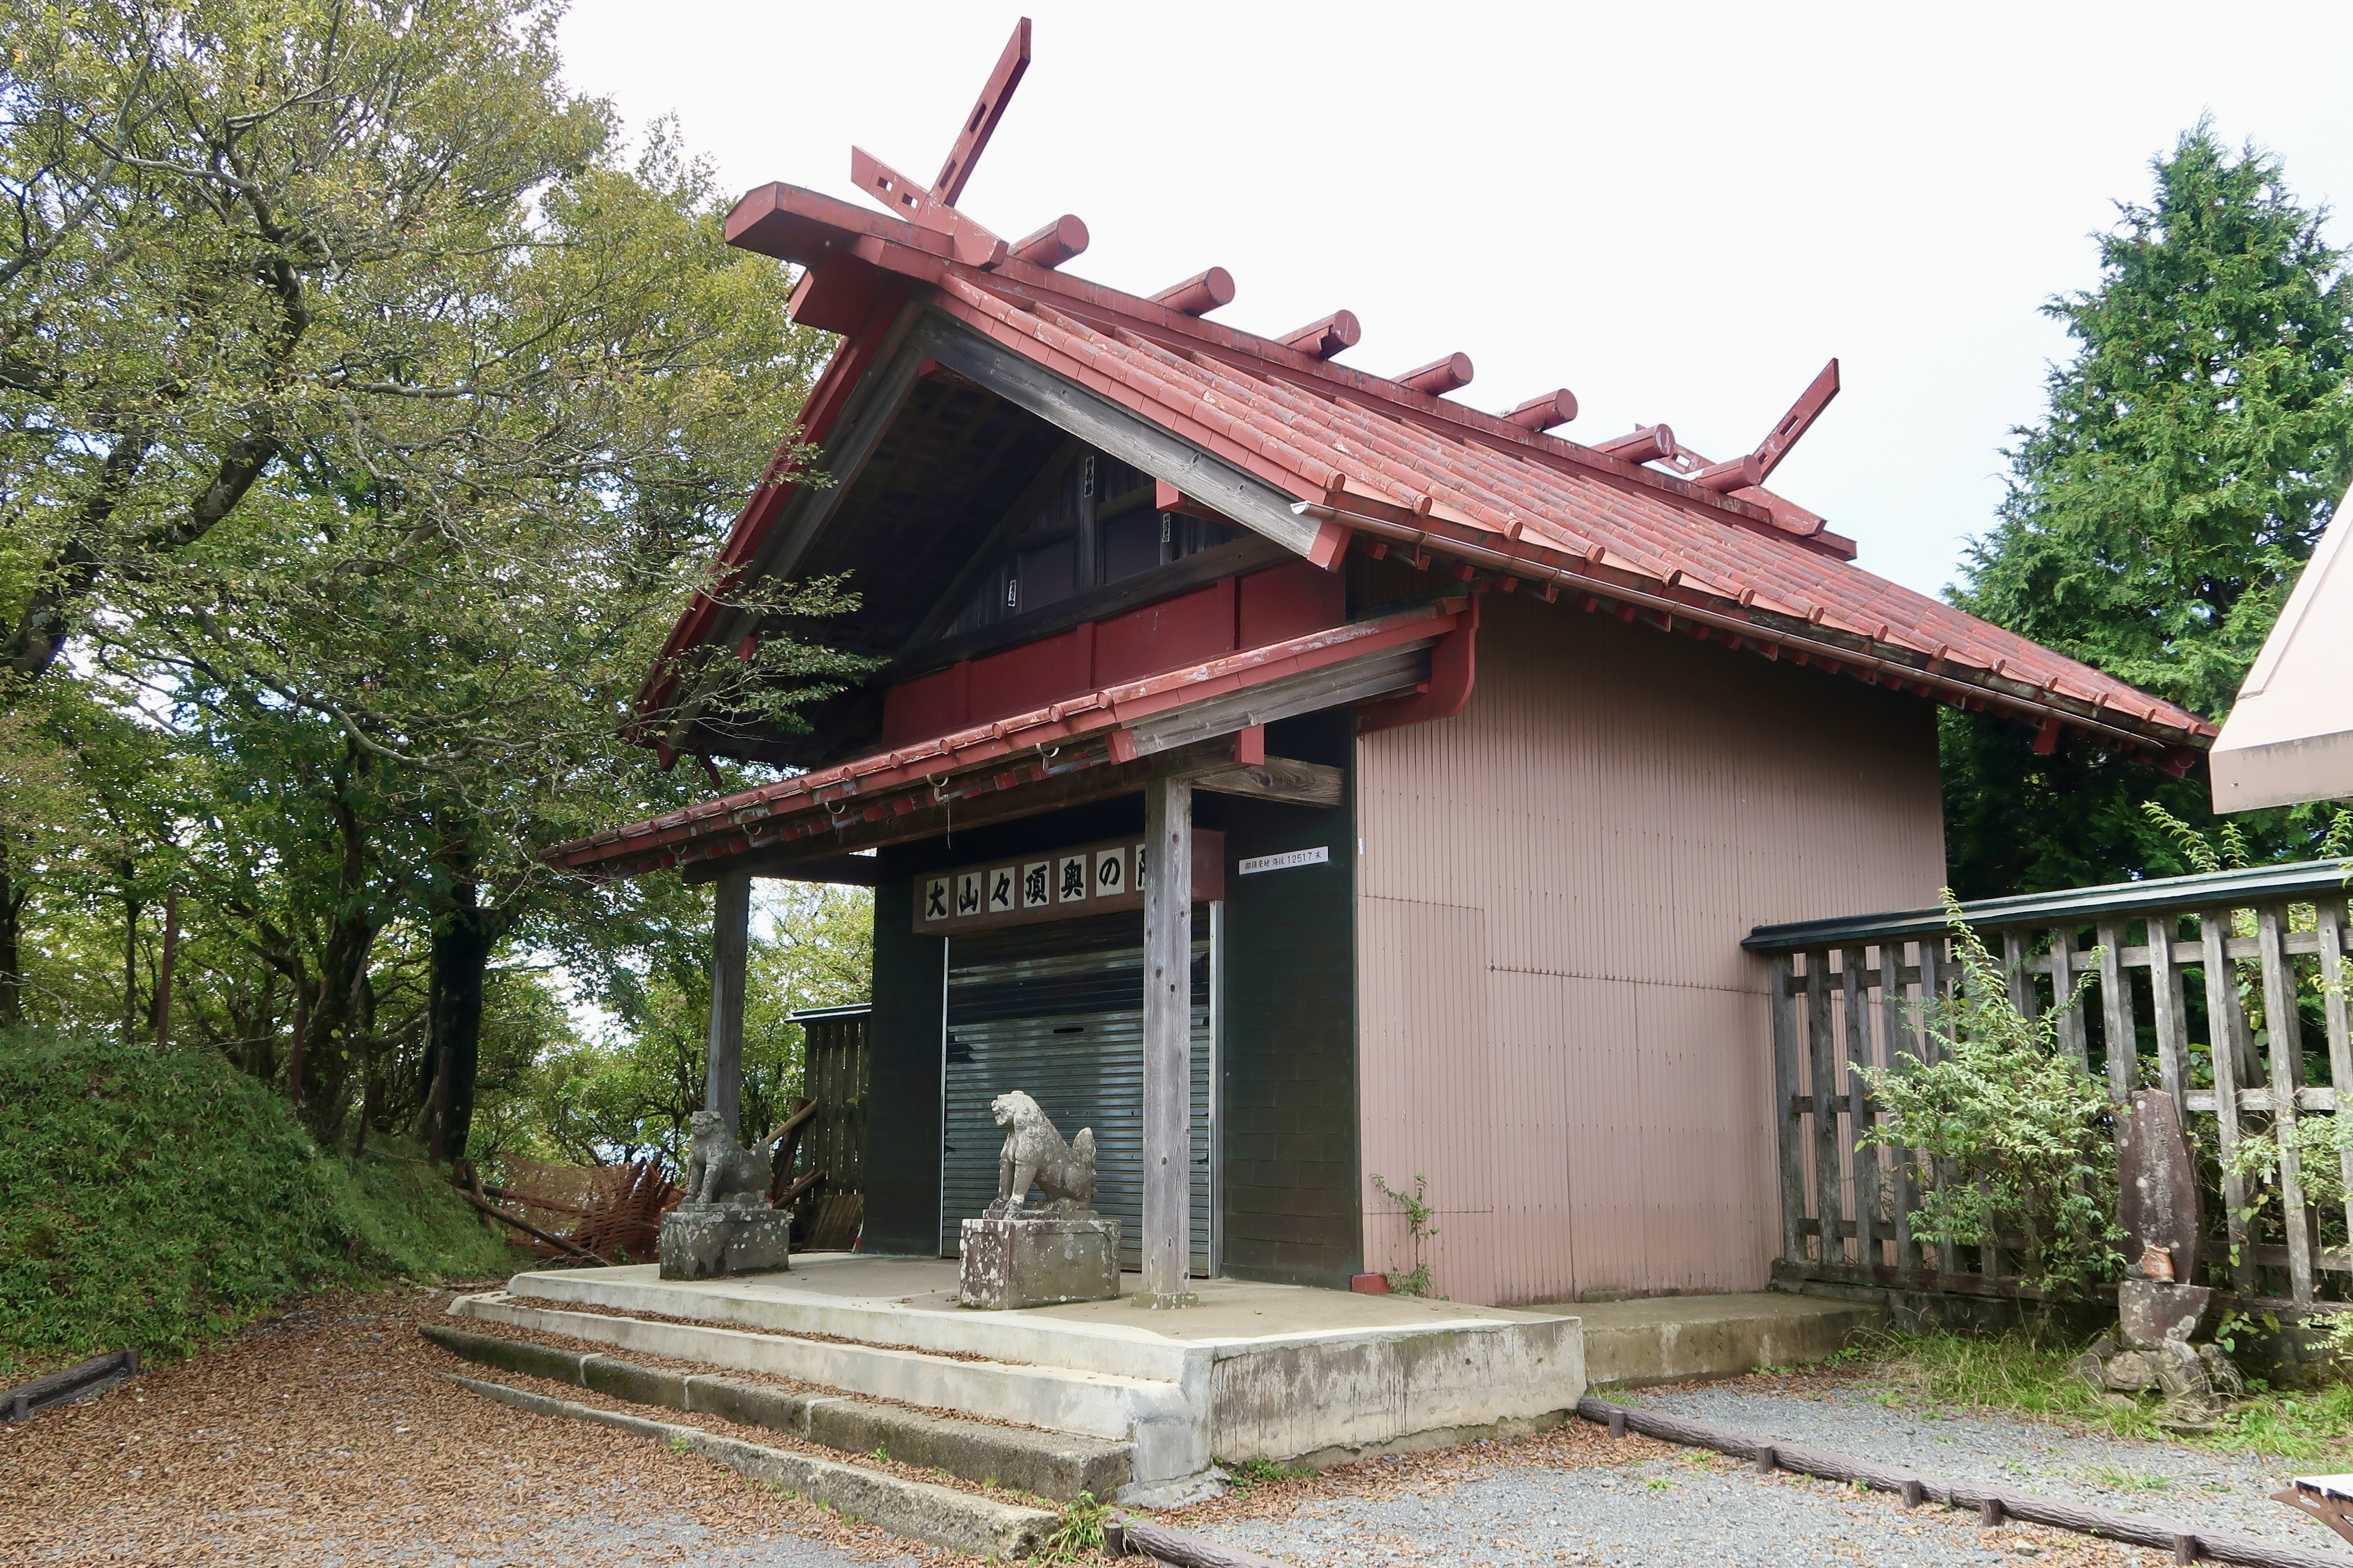 Zensha, or Front shrine